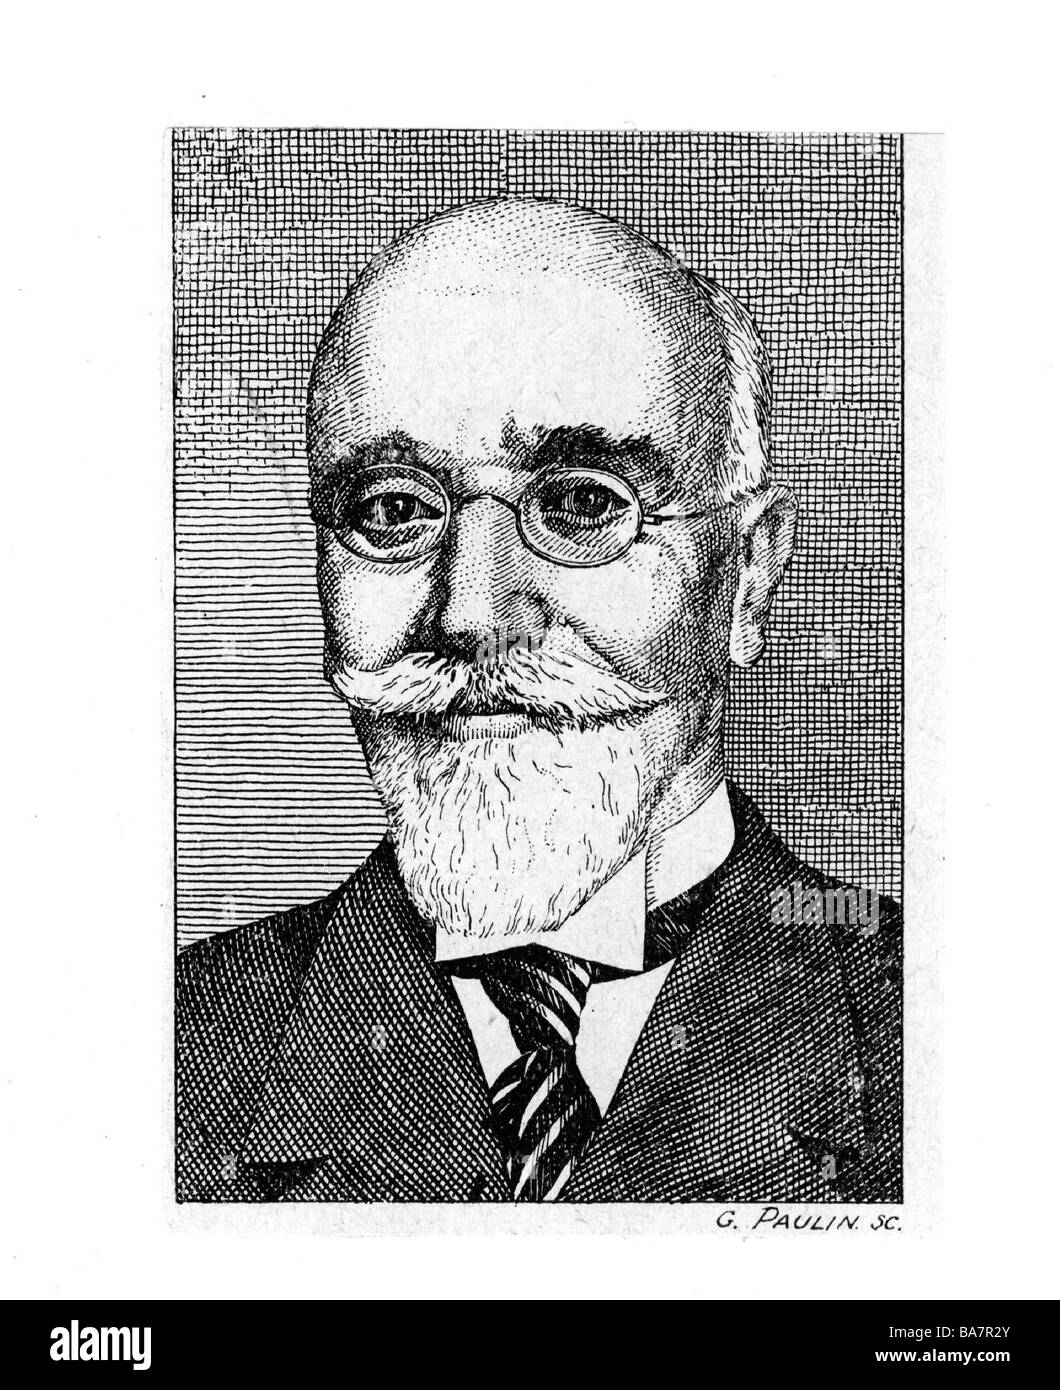 Venizelos, Eleutherios, 23.8.1864 - 18.3.1936, Greek politician, prime minister, portrait, wood engraving, by G. Paulin, Stock Photo